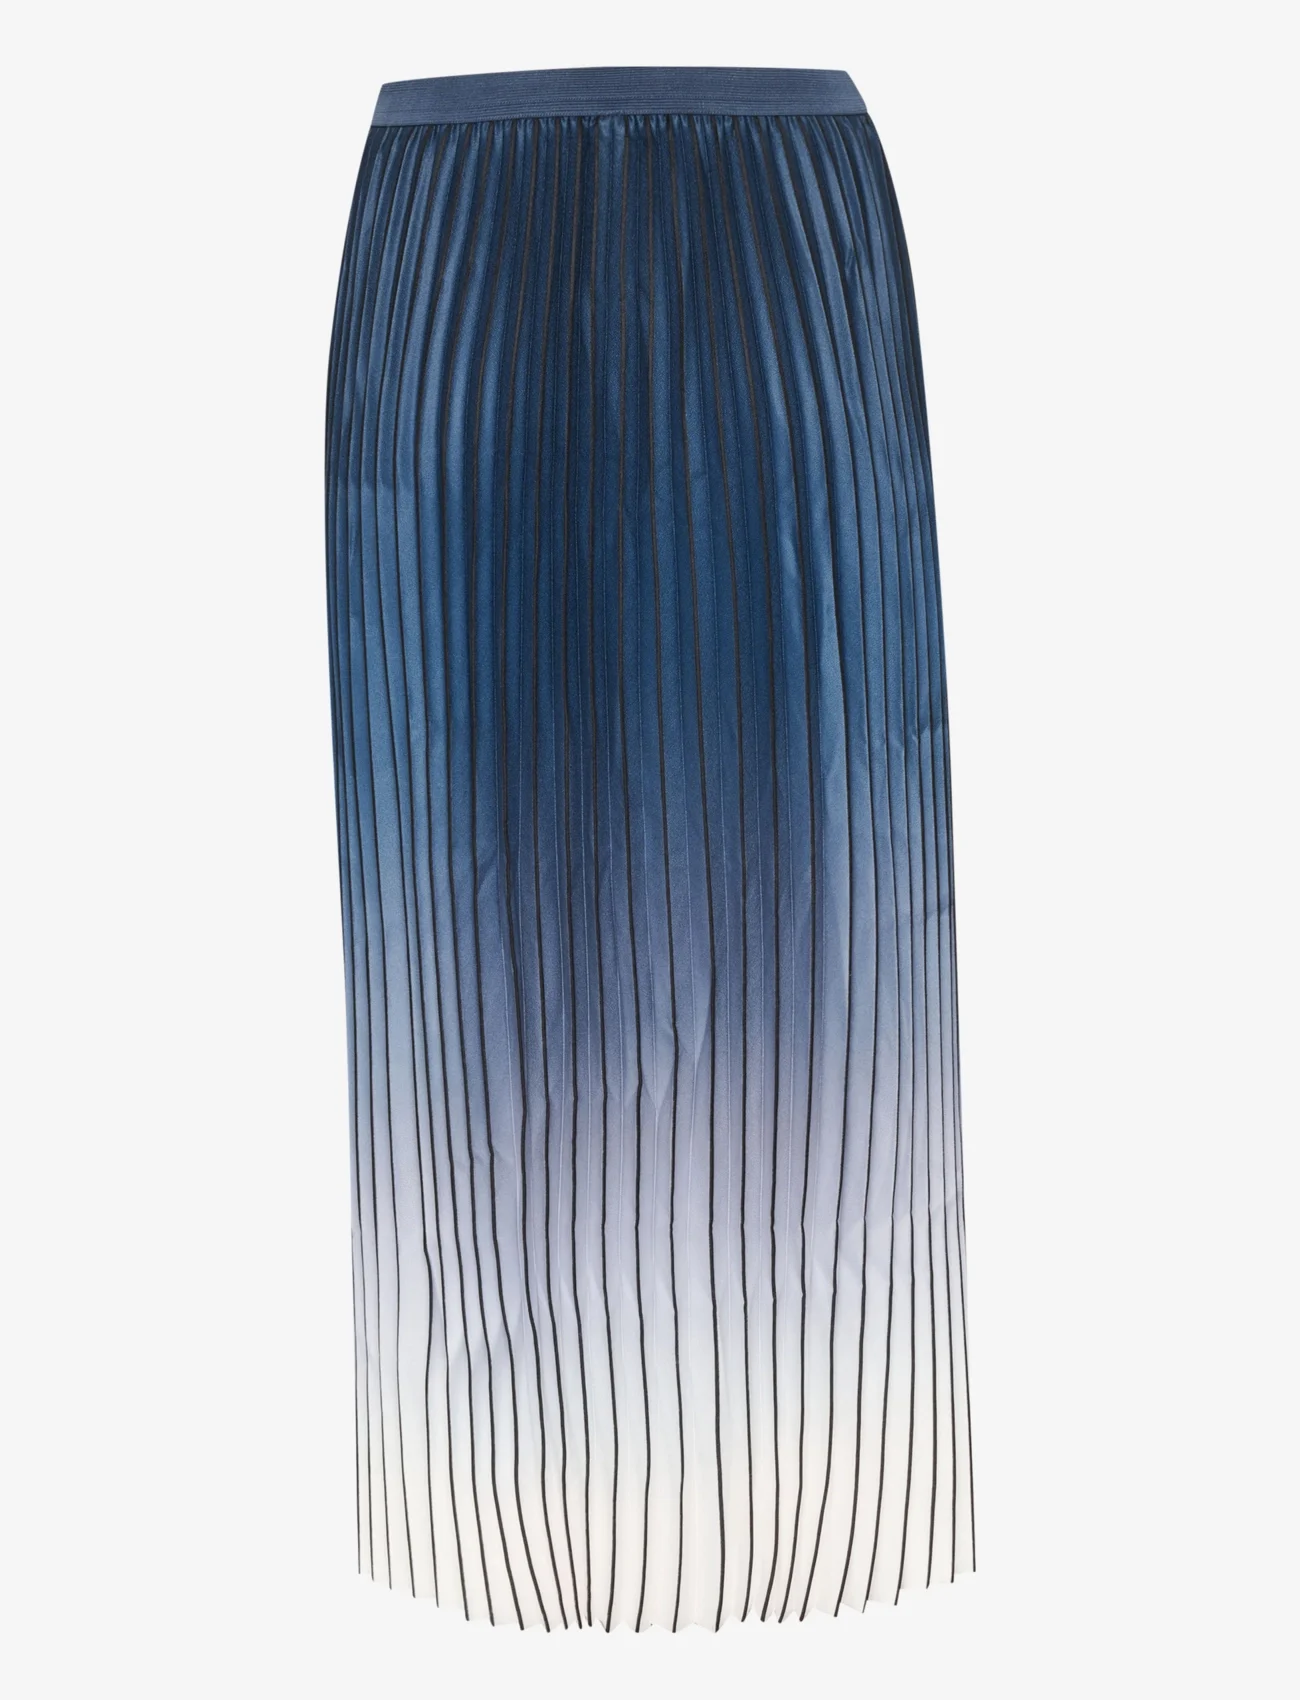 Culture - CUscarlett Ombre Skirt - plisserede nederdele - dress blues - 1